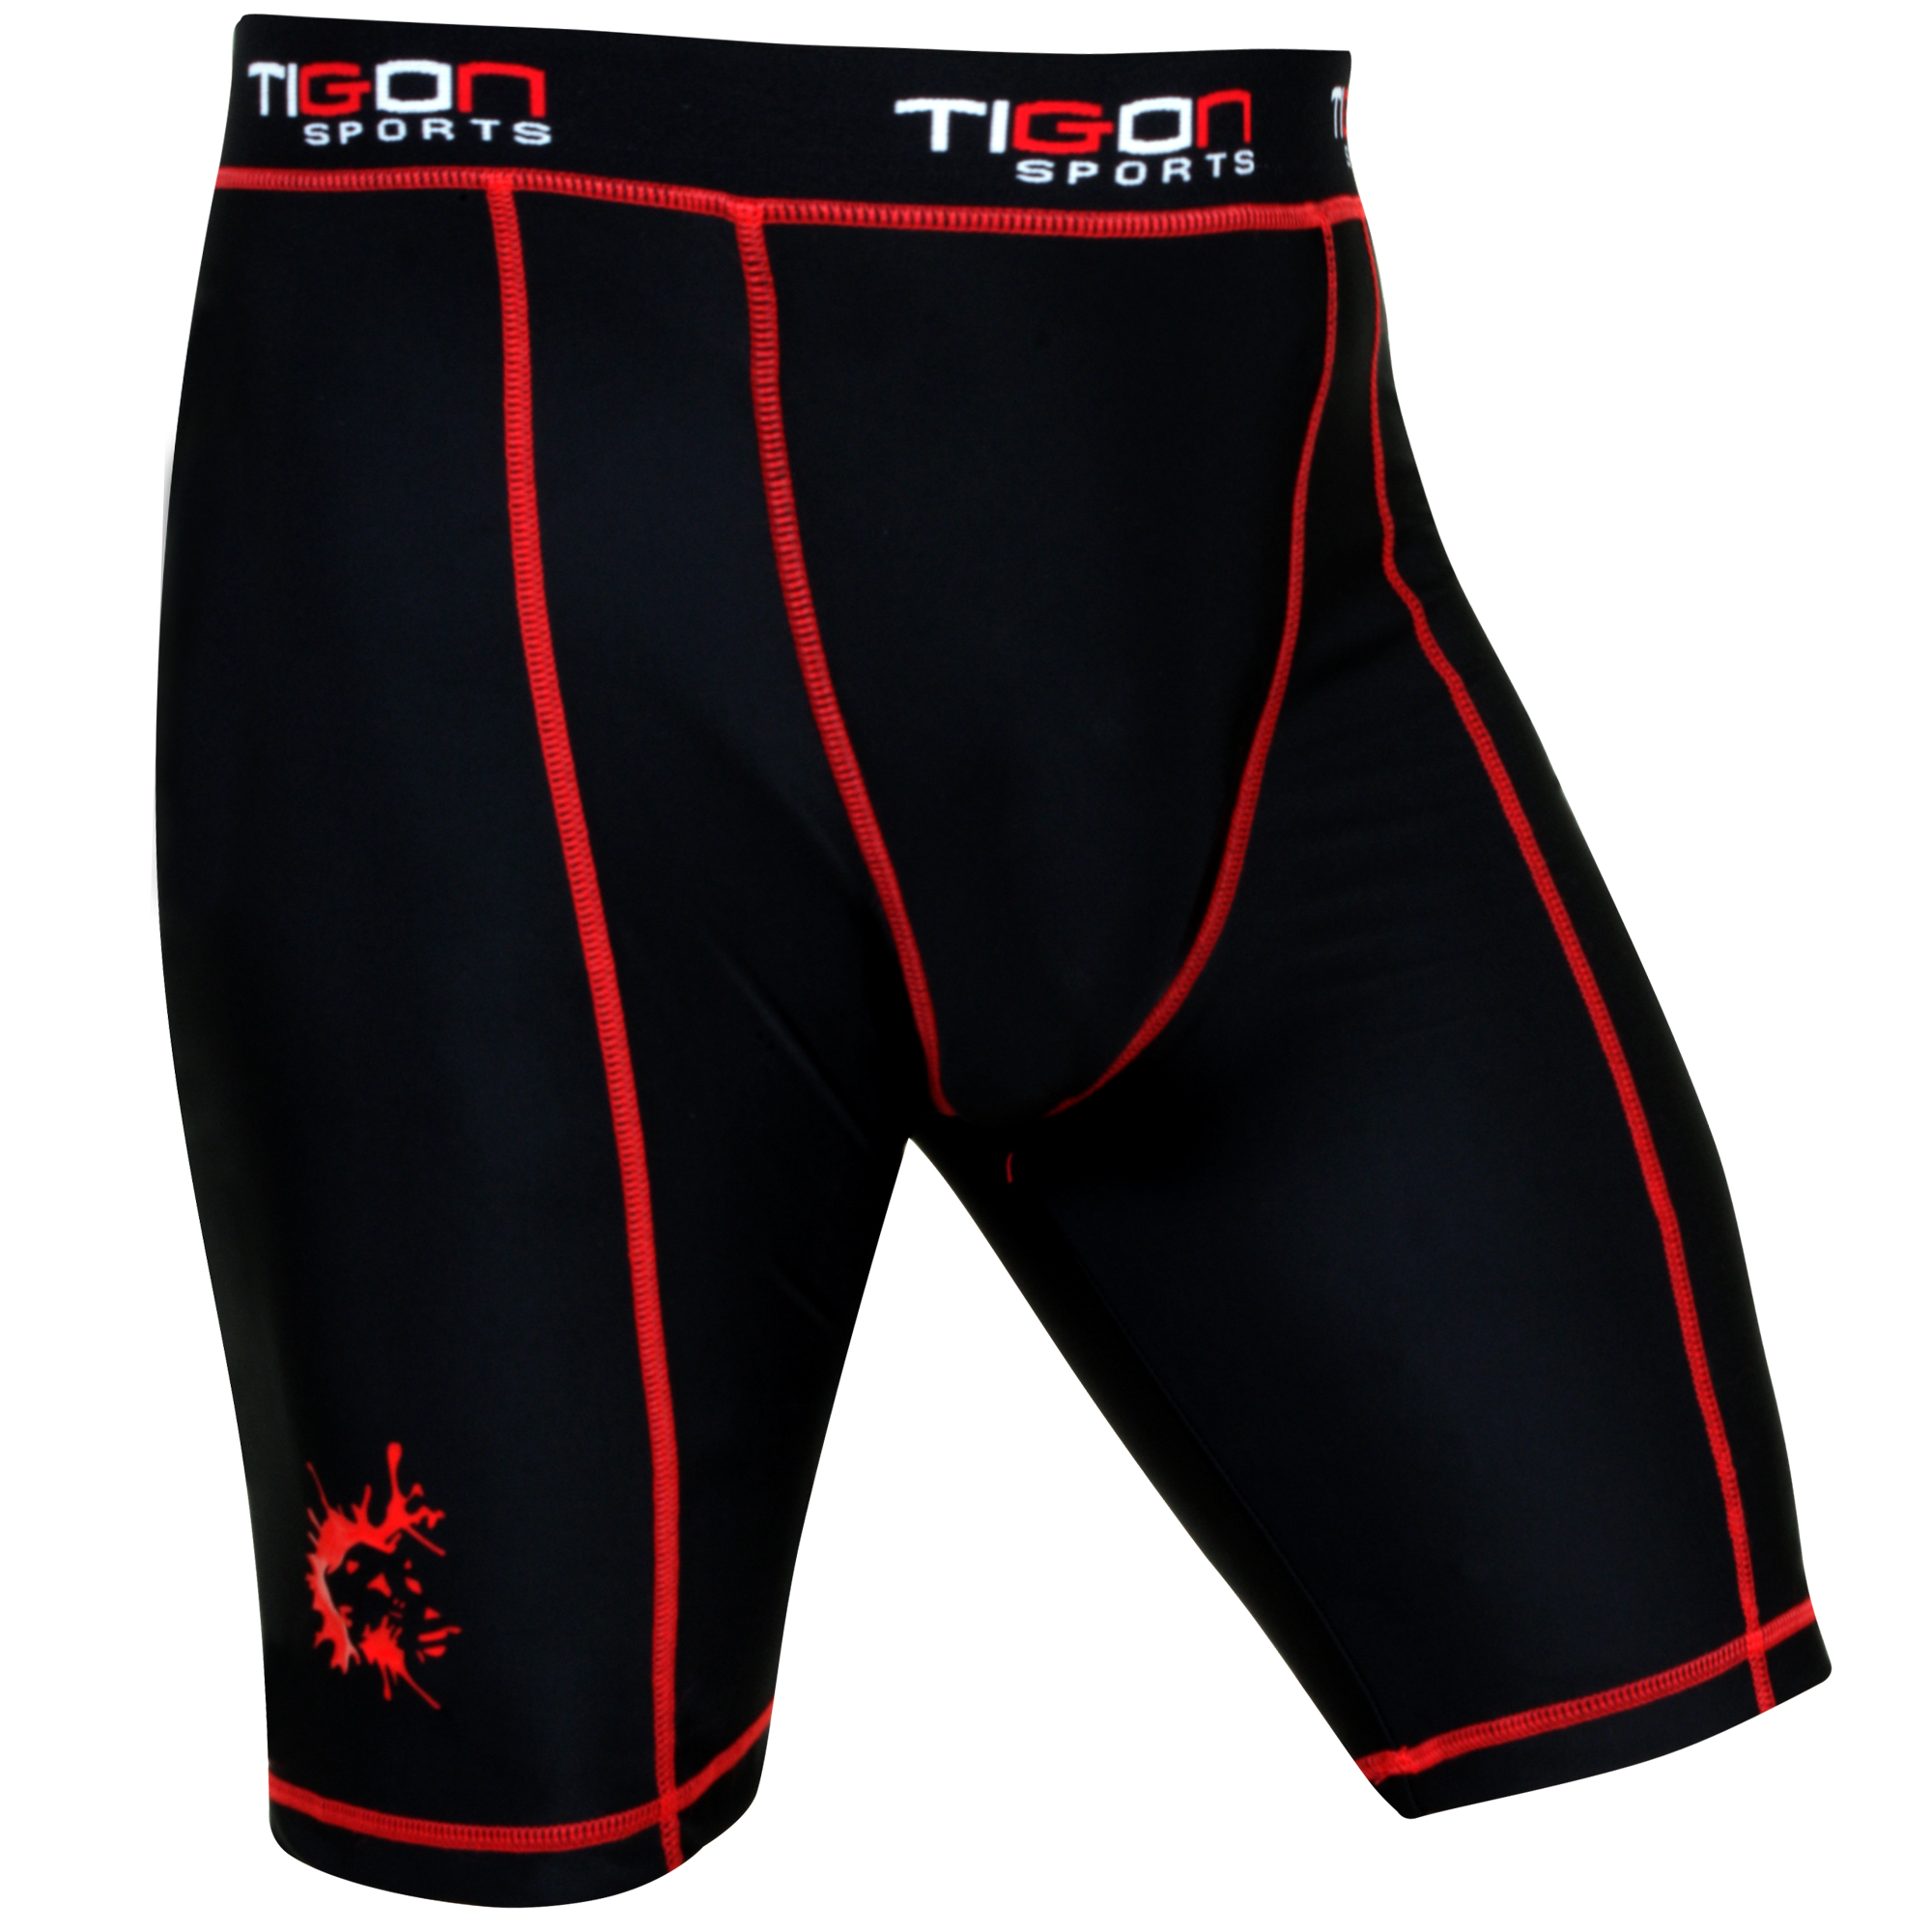 Tigon Sports Classic Compression Shorts with Groin Guard